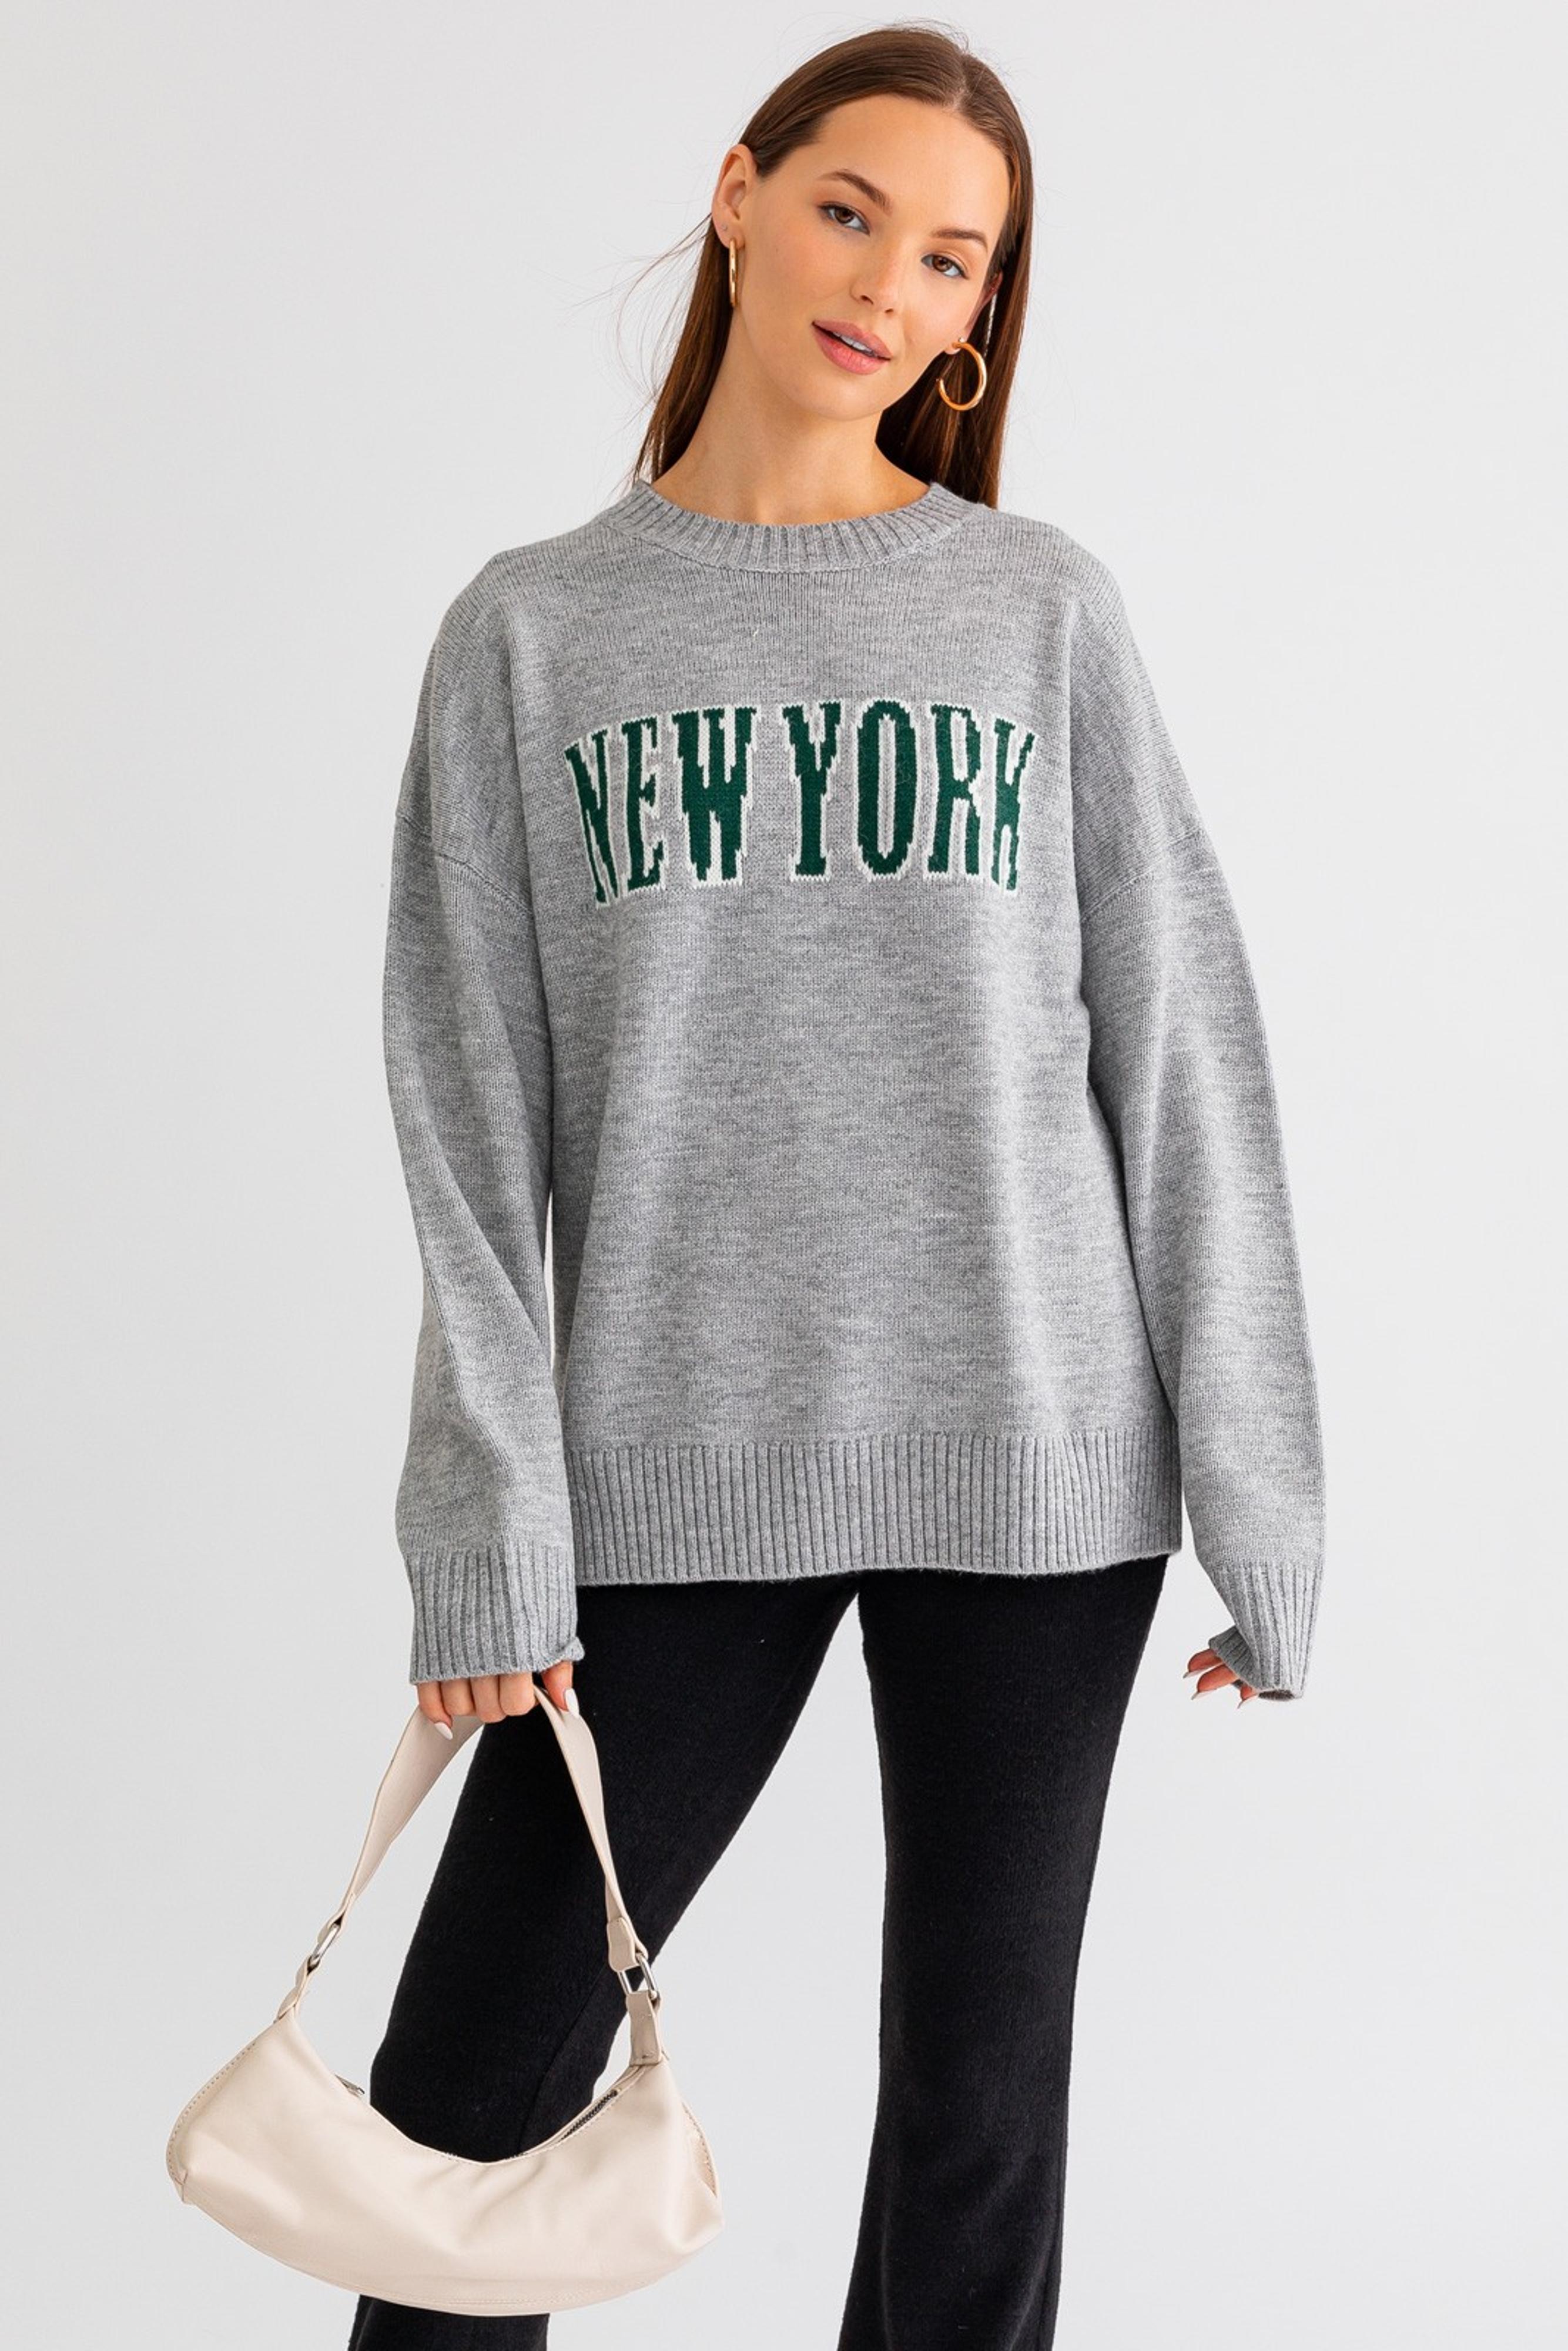  New York Sweater